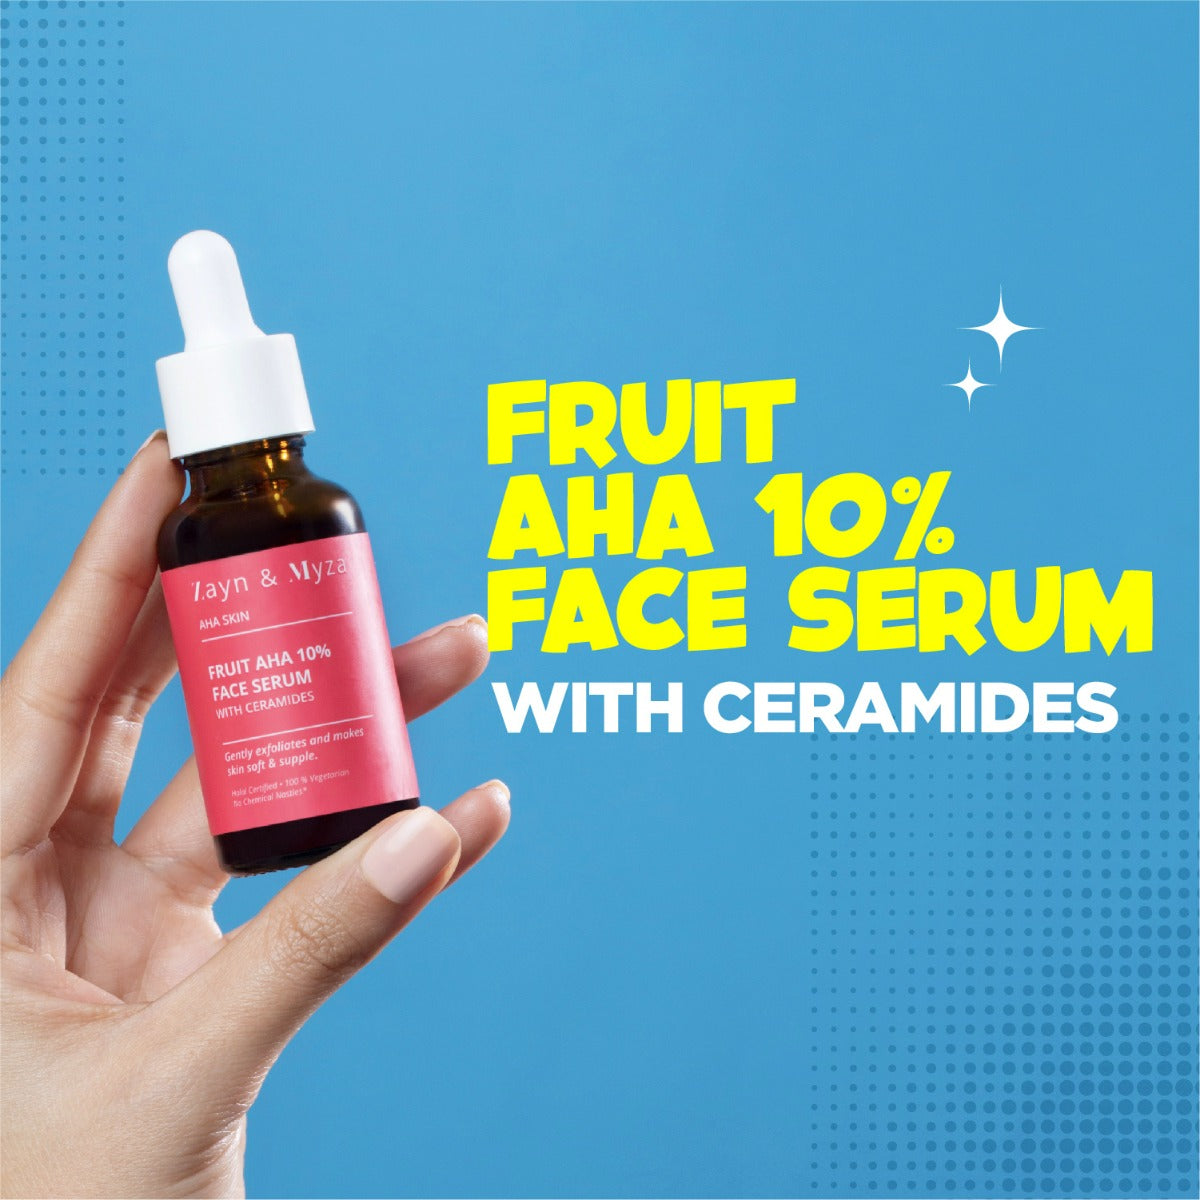 Zayn &amp; Myza Fruit AHA 10% Face Serum with Ceramides (30ml)